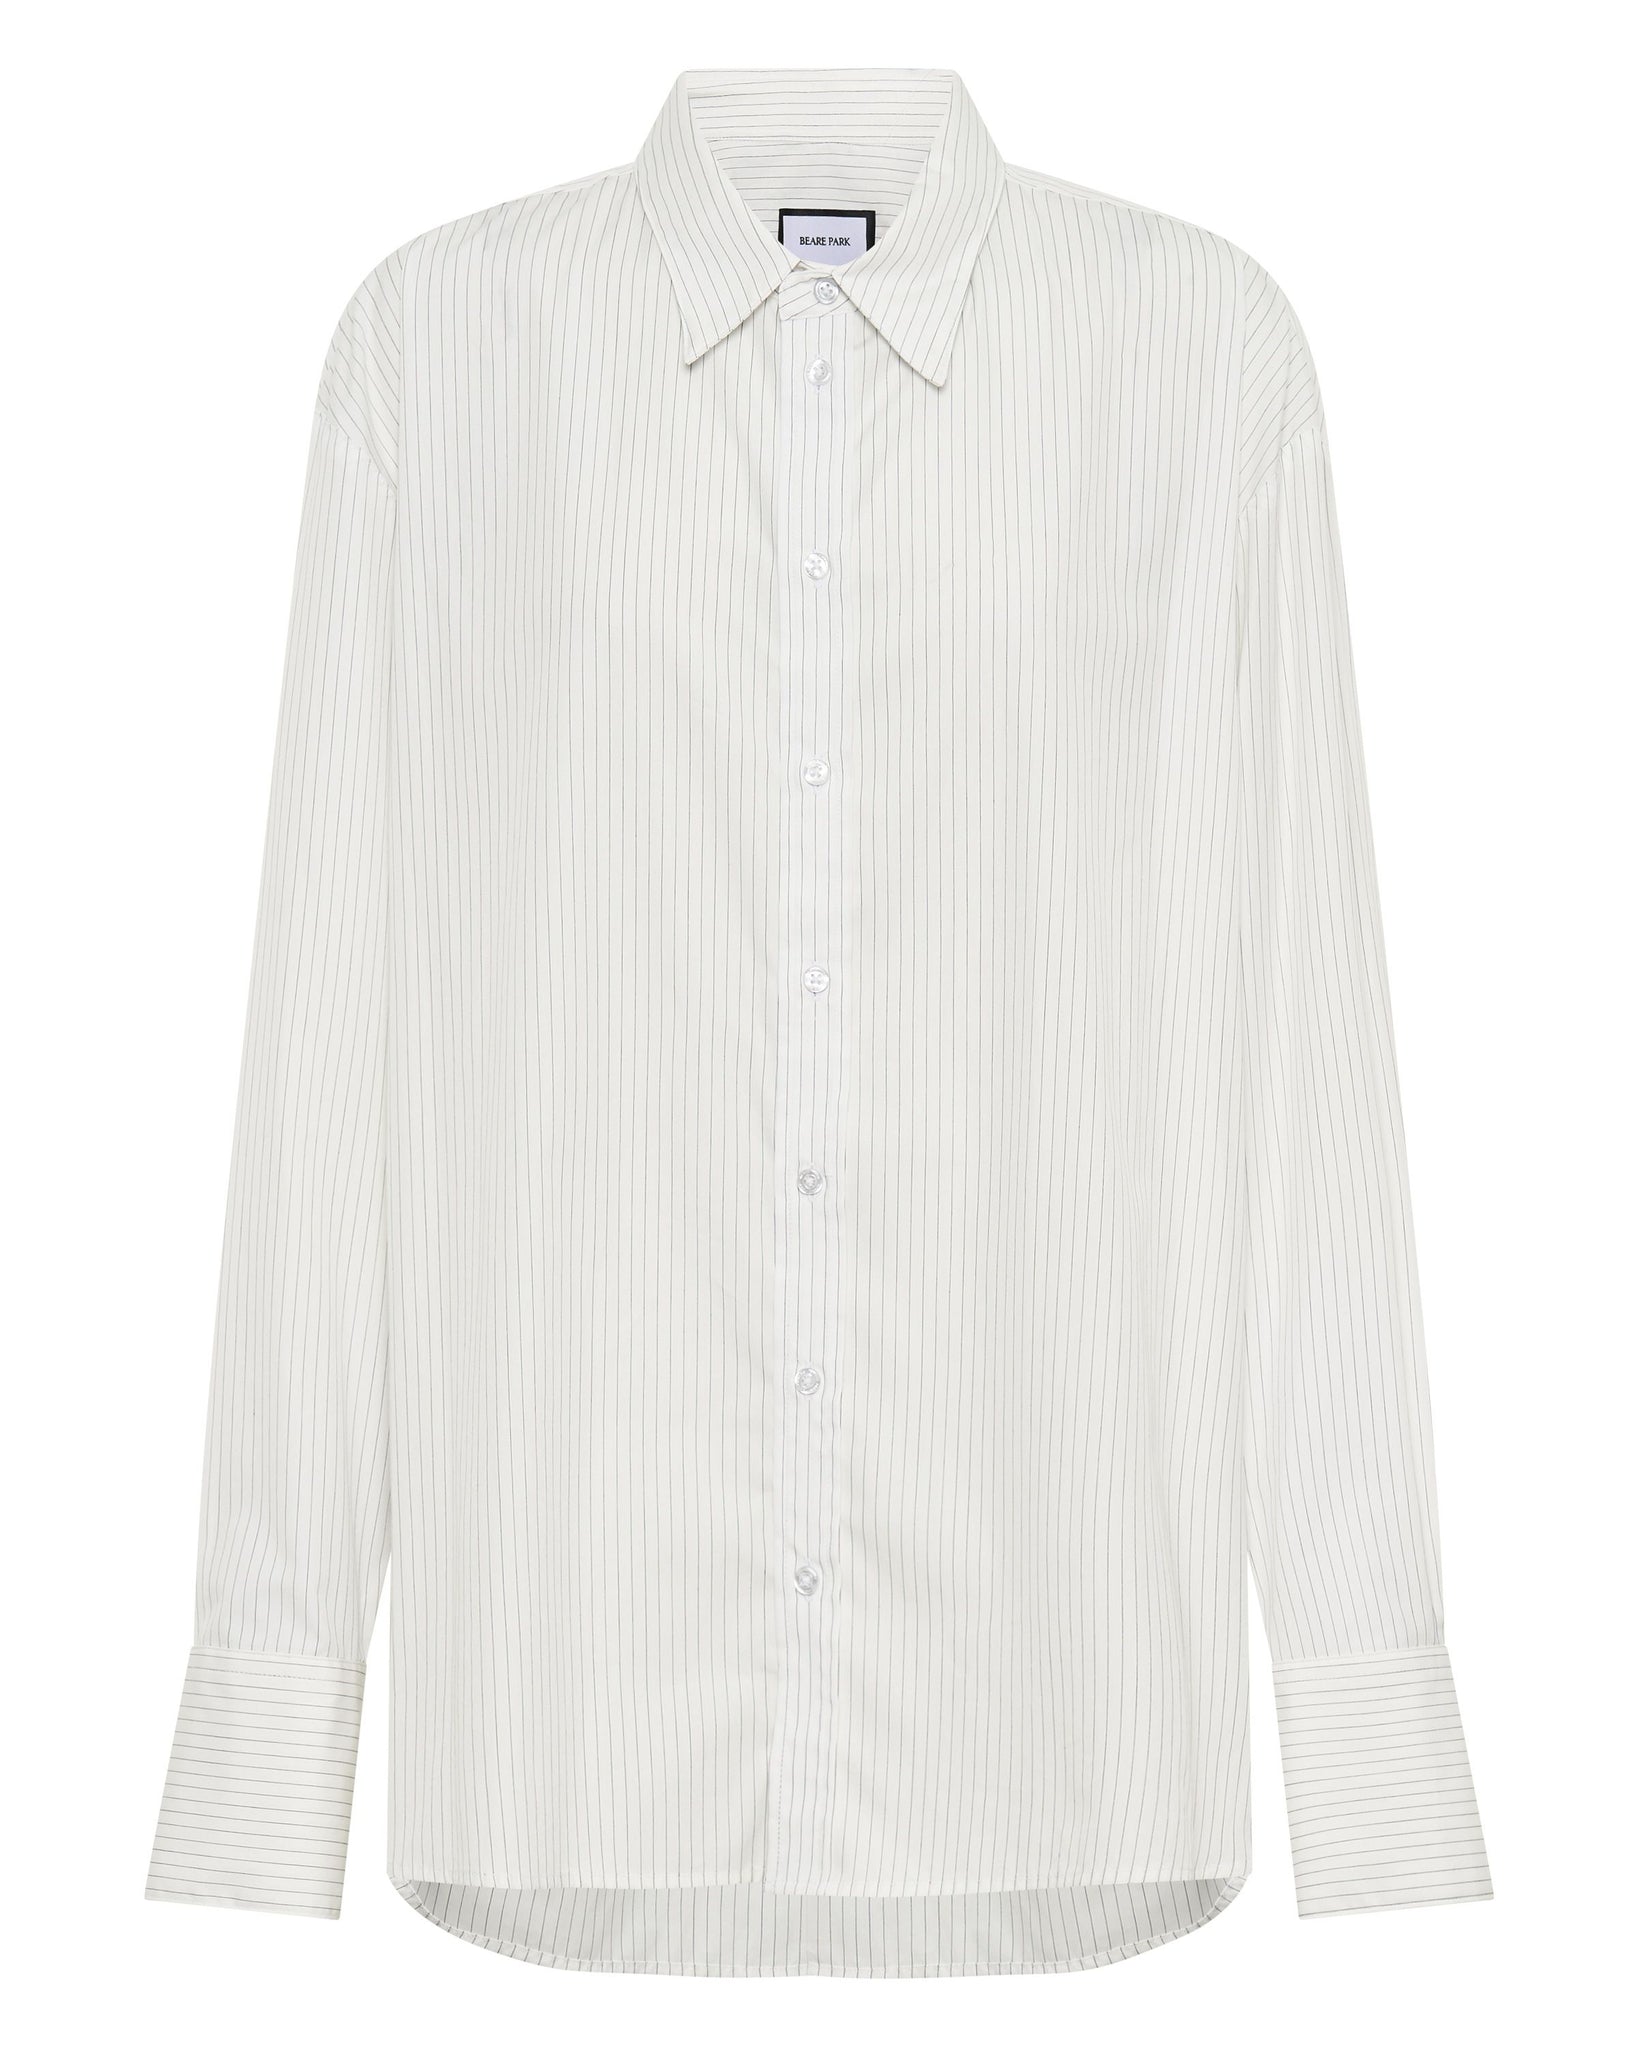 BP Classic Cotton Shirt: Pinstripe